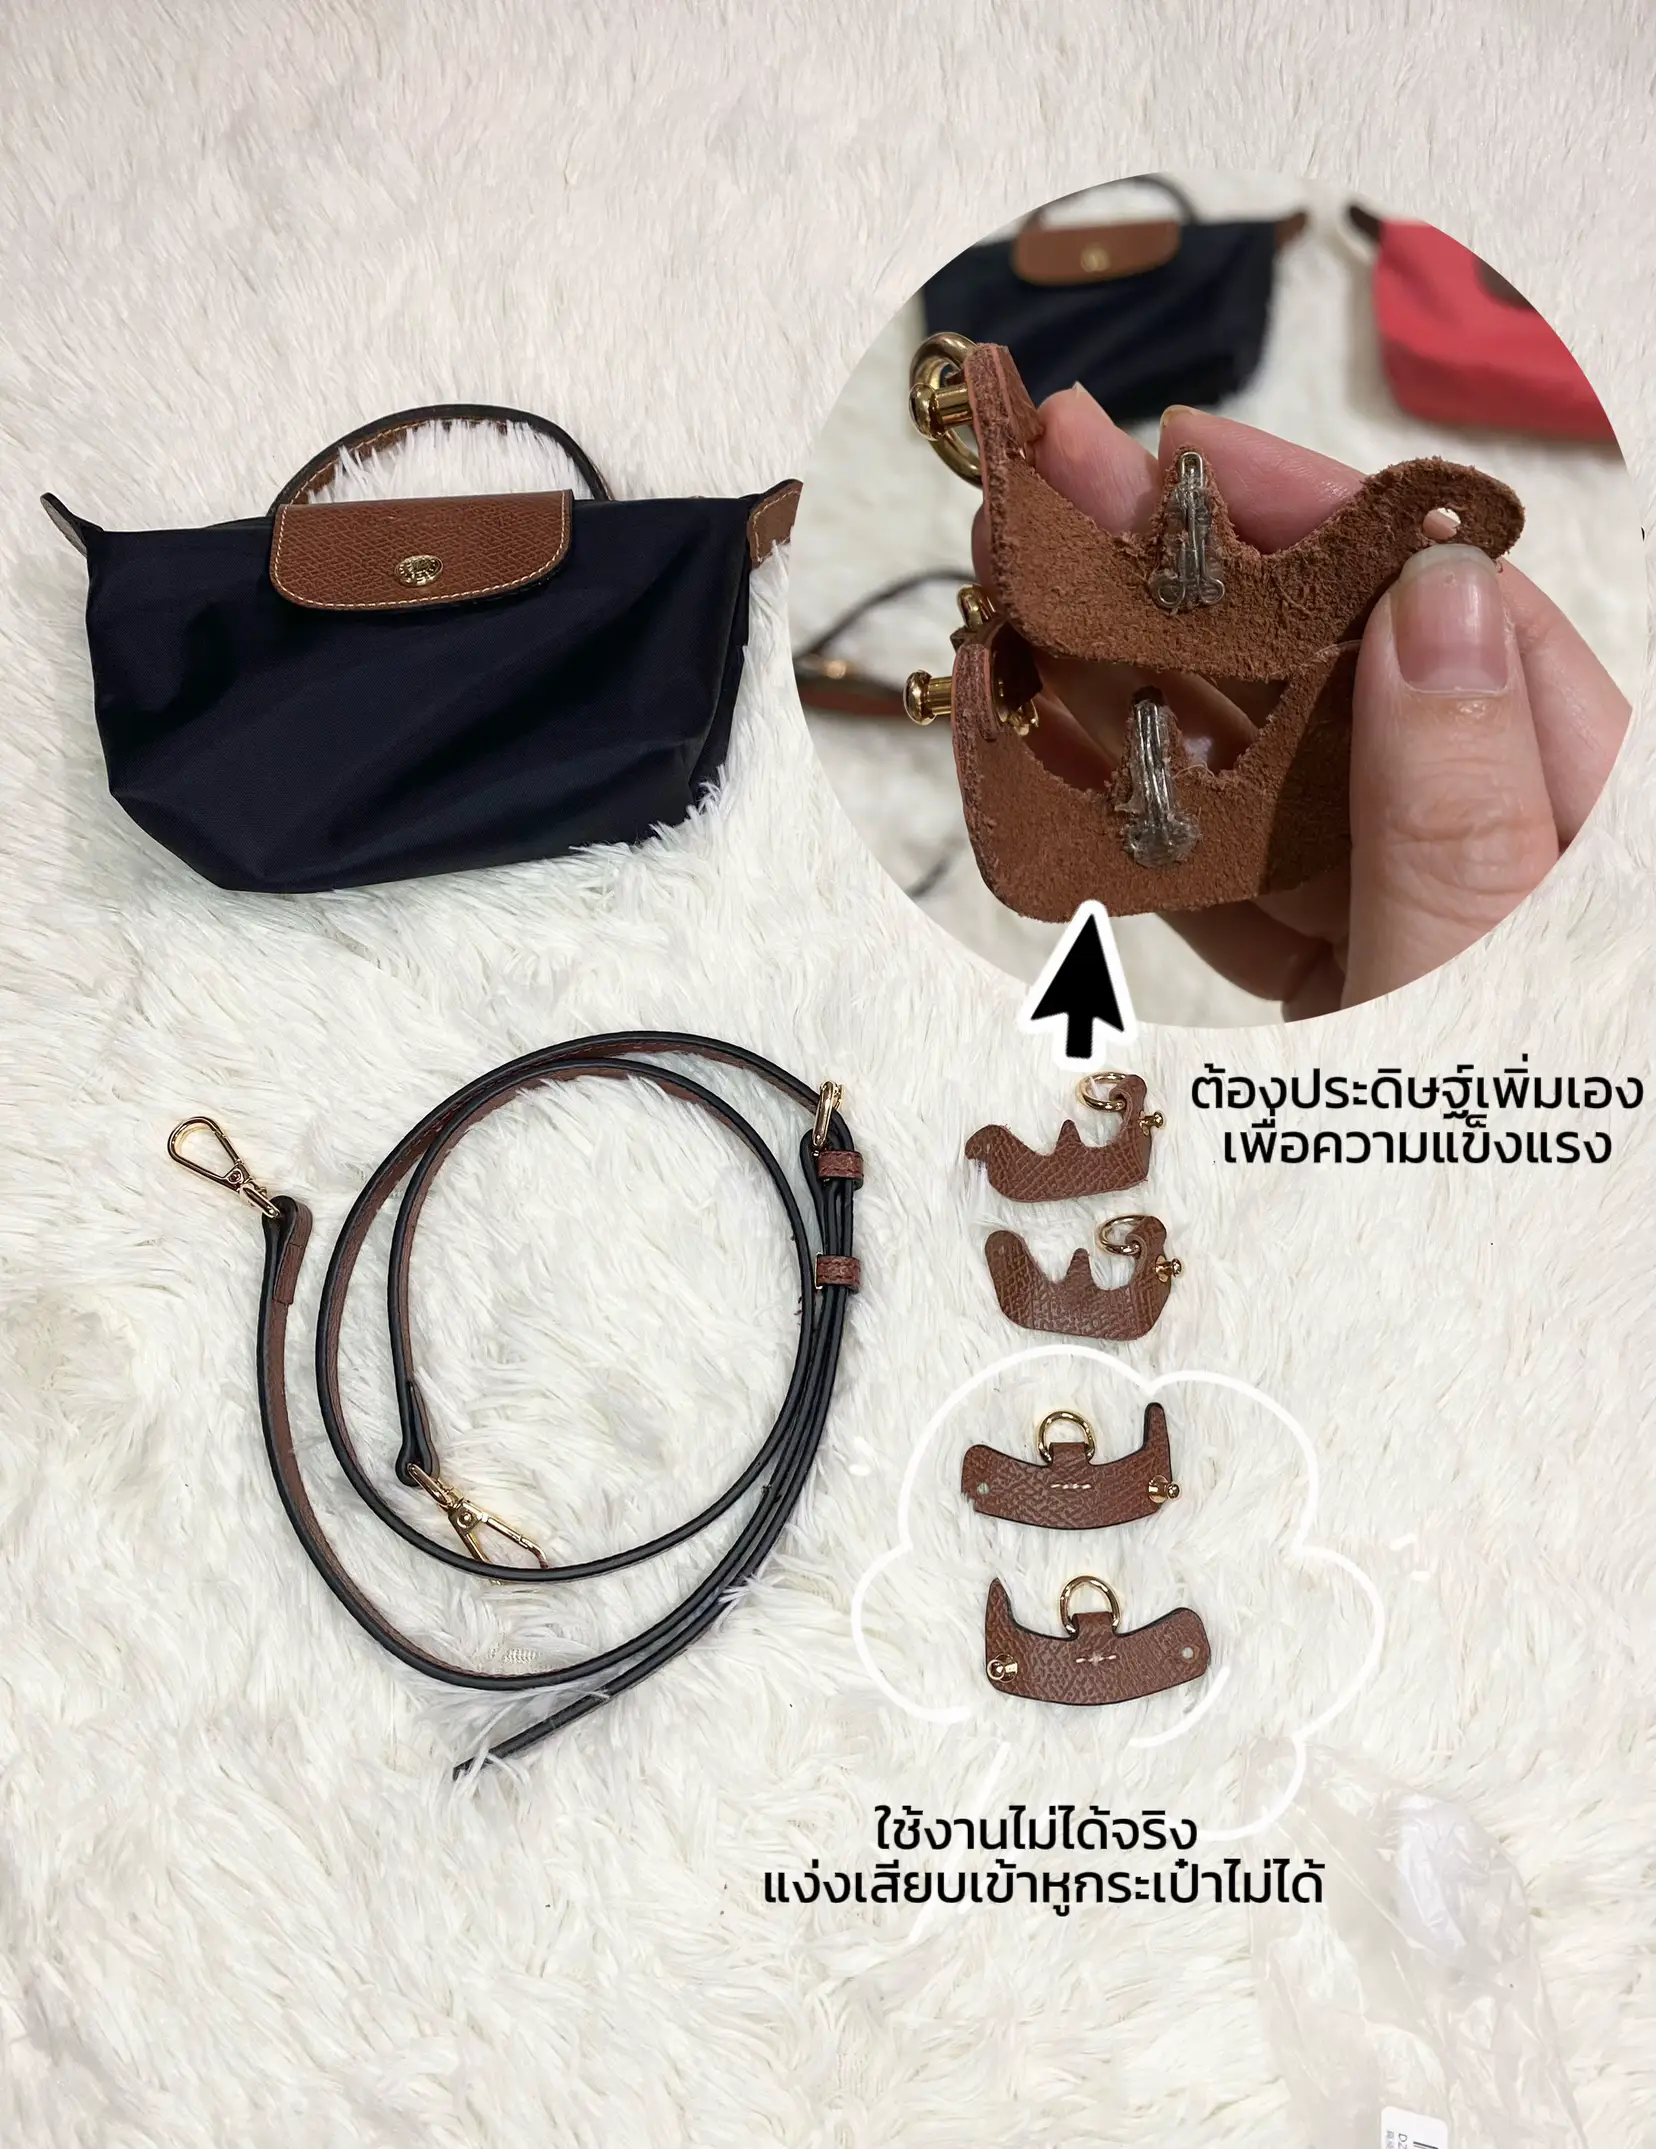 Longchamp Mini Pouch - what year? : r/handbags